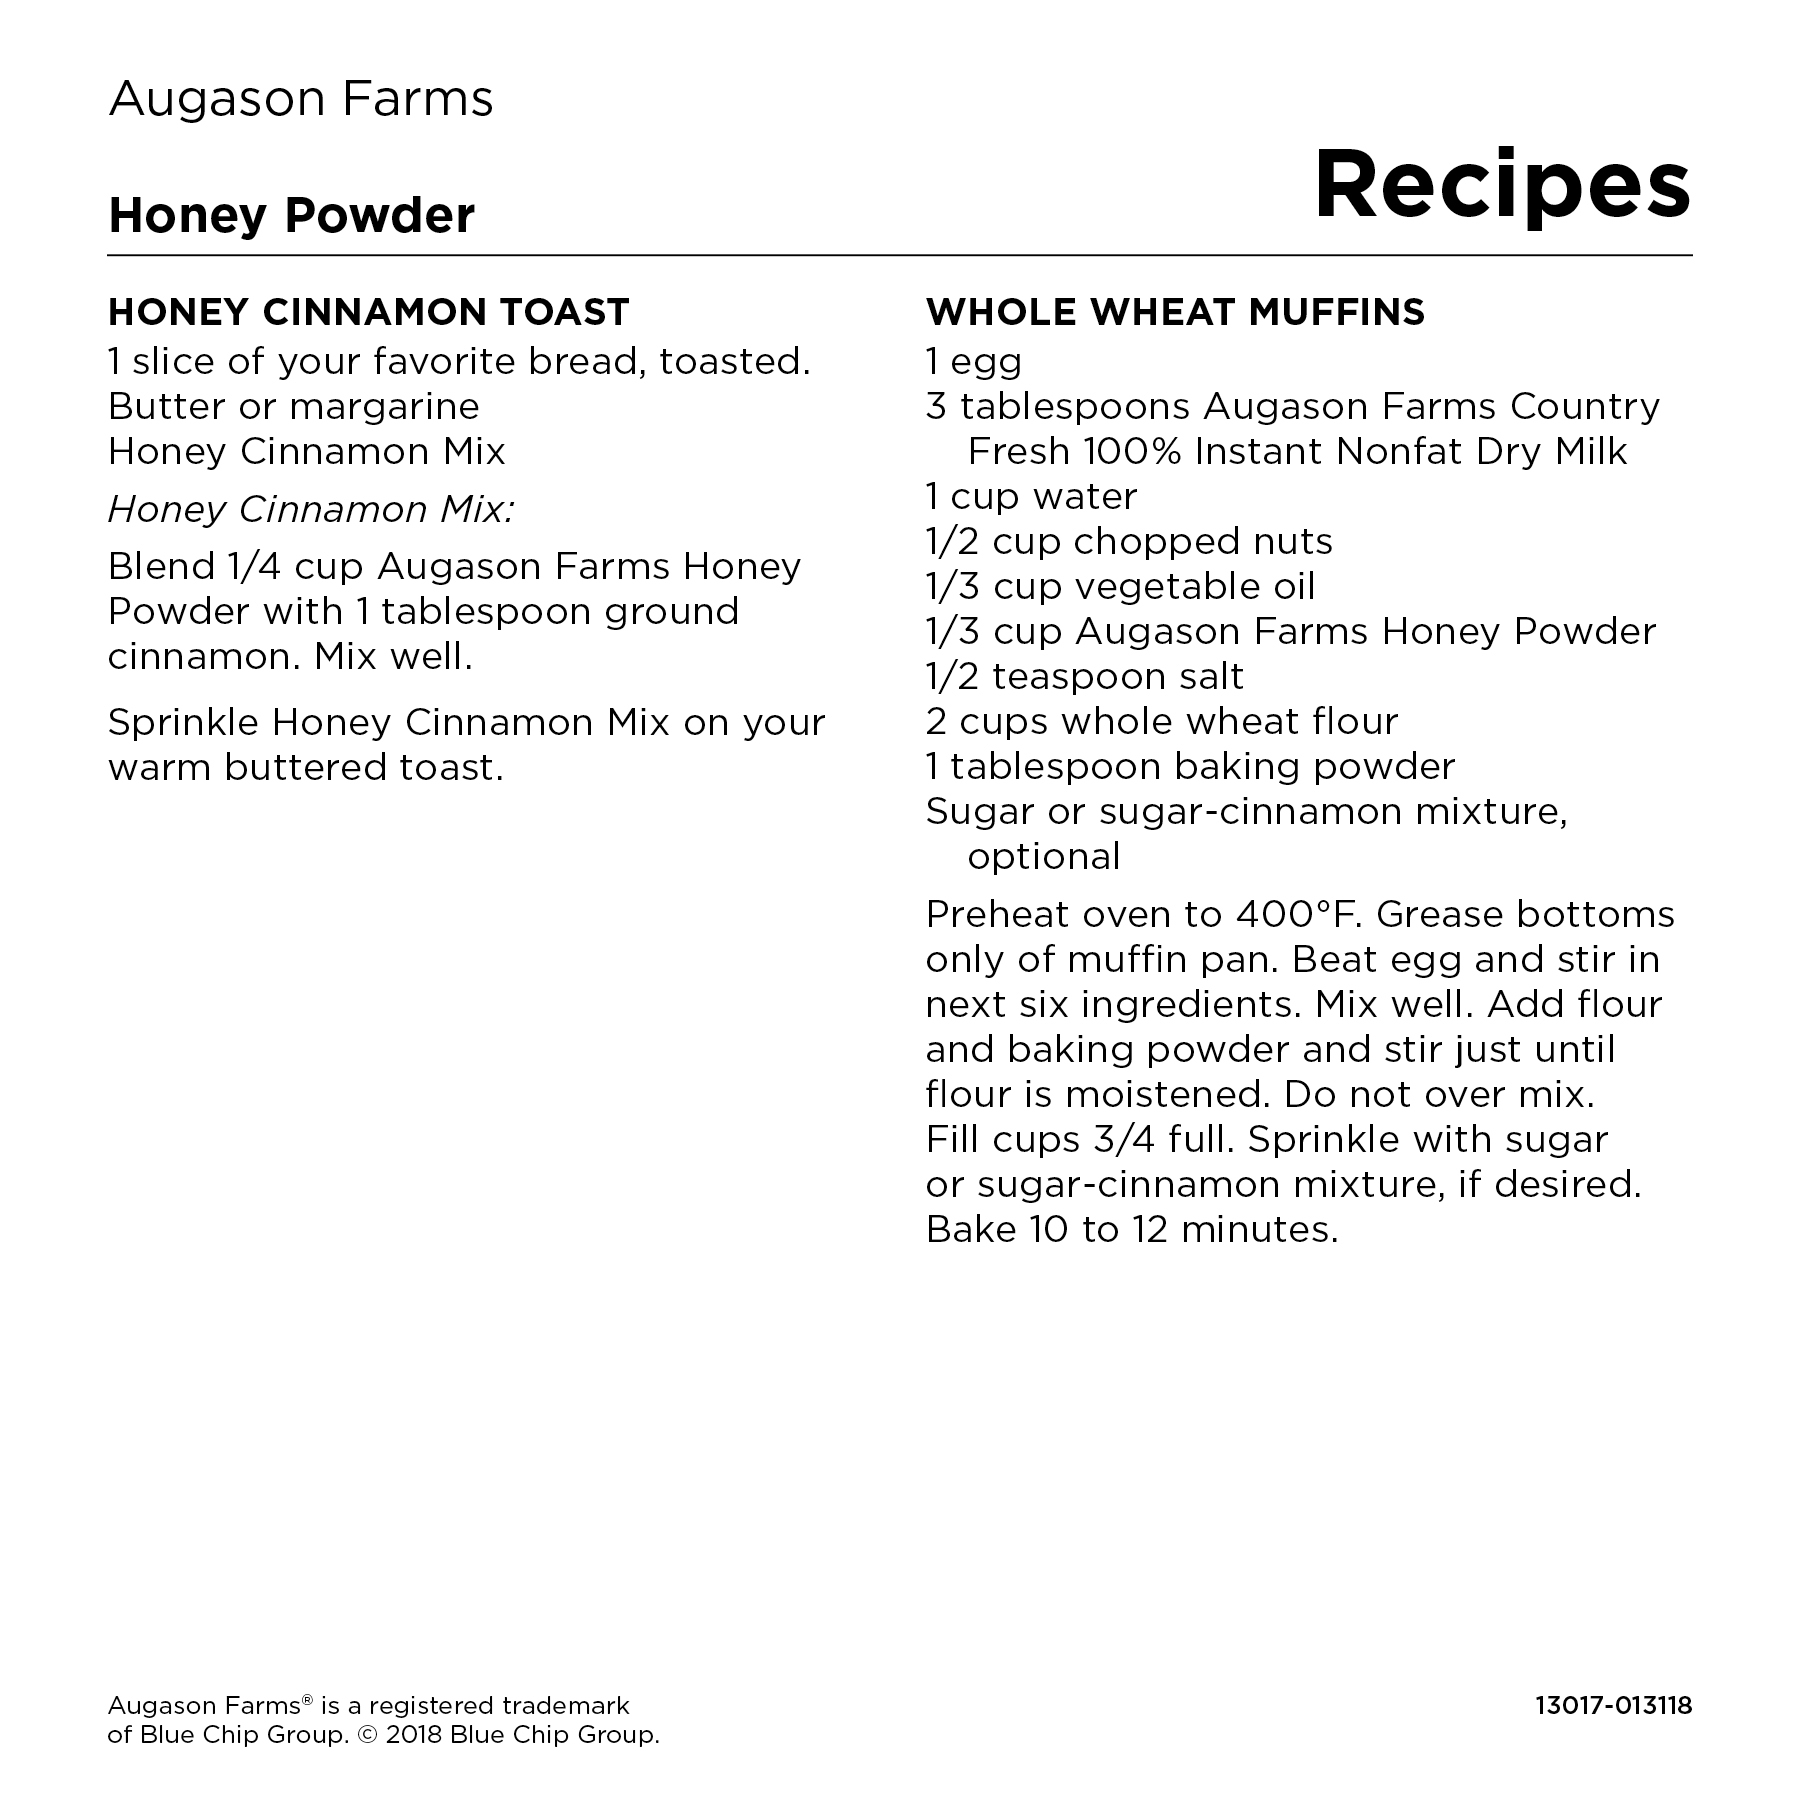 Augason Farms Sugar & Honey Powder Blend - image 5 of 8